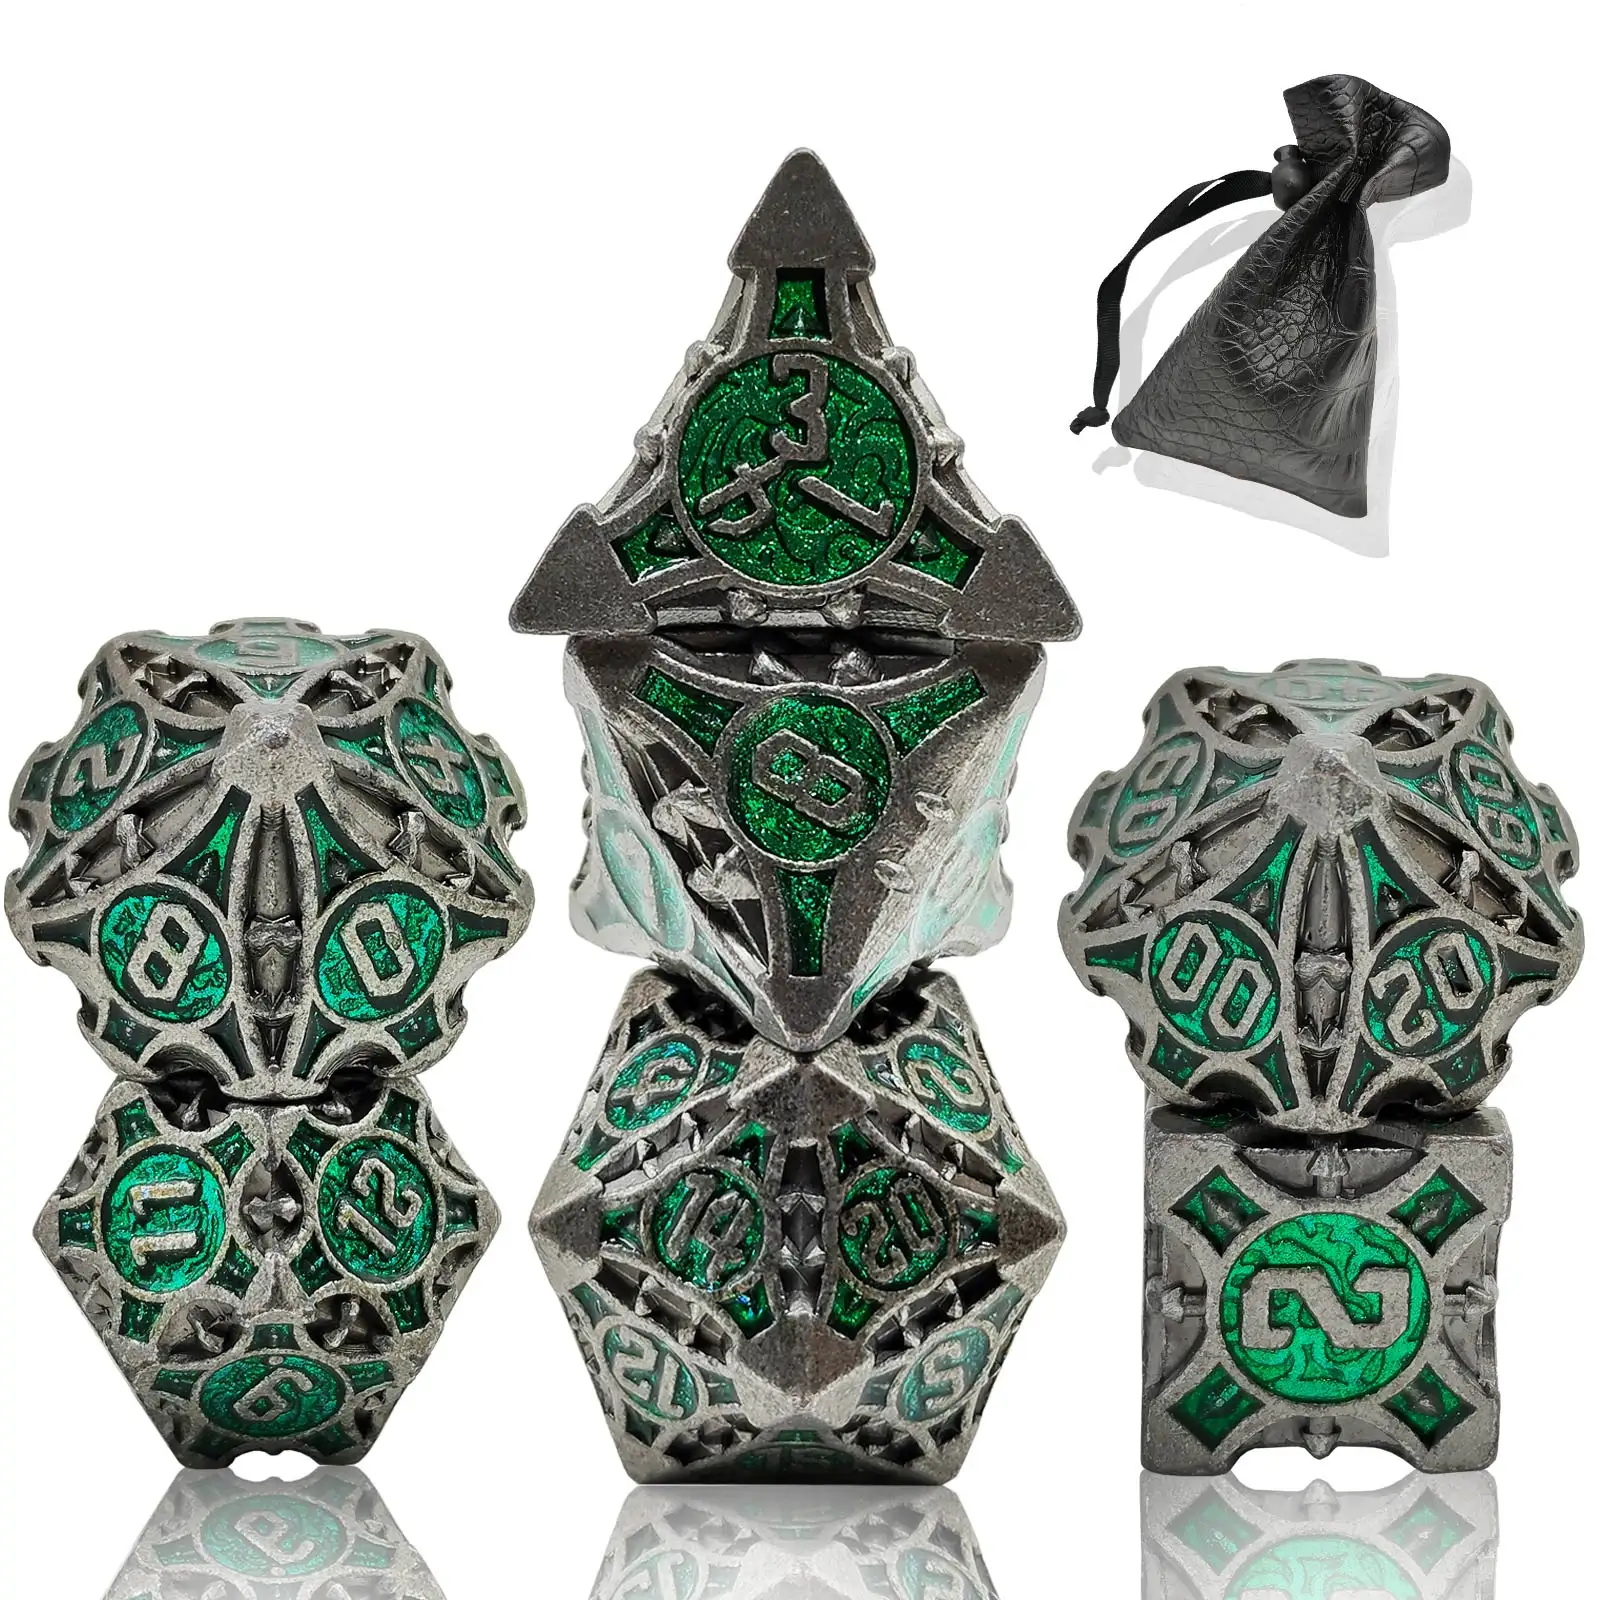 Custom Polyhedral Zinklegering Casino Dobbelstenen Dungeons & Dragons Game Tips Dobbelstenen Sets Oude D & D Metal Dice Sets groothandel